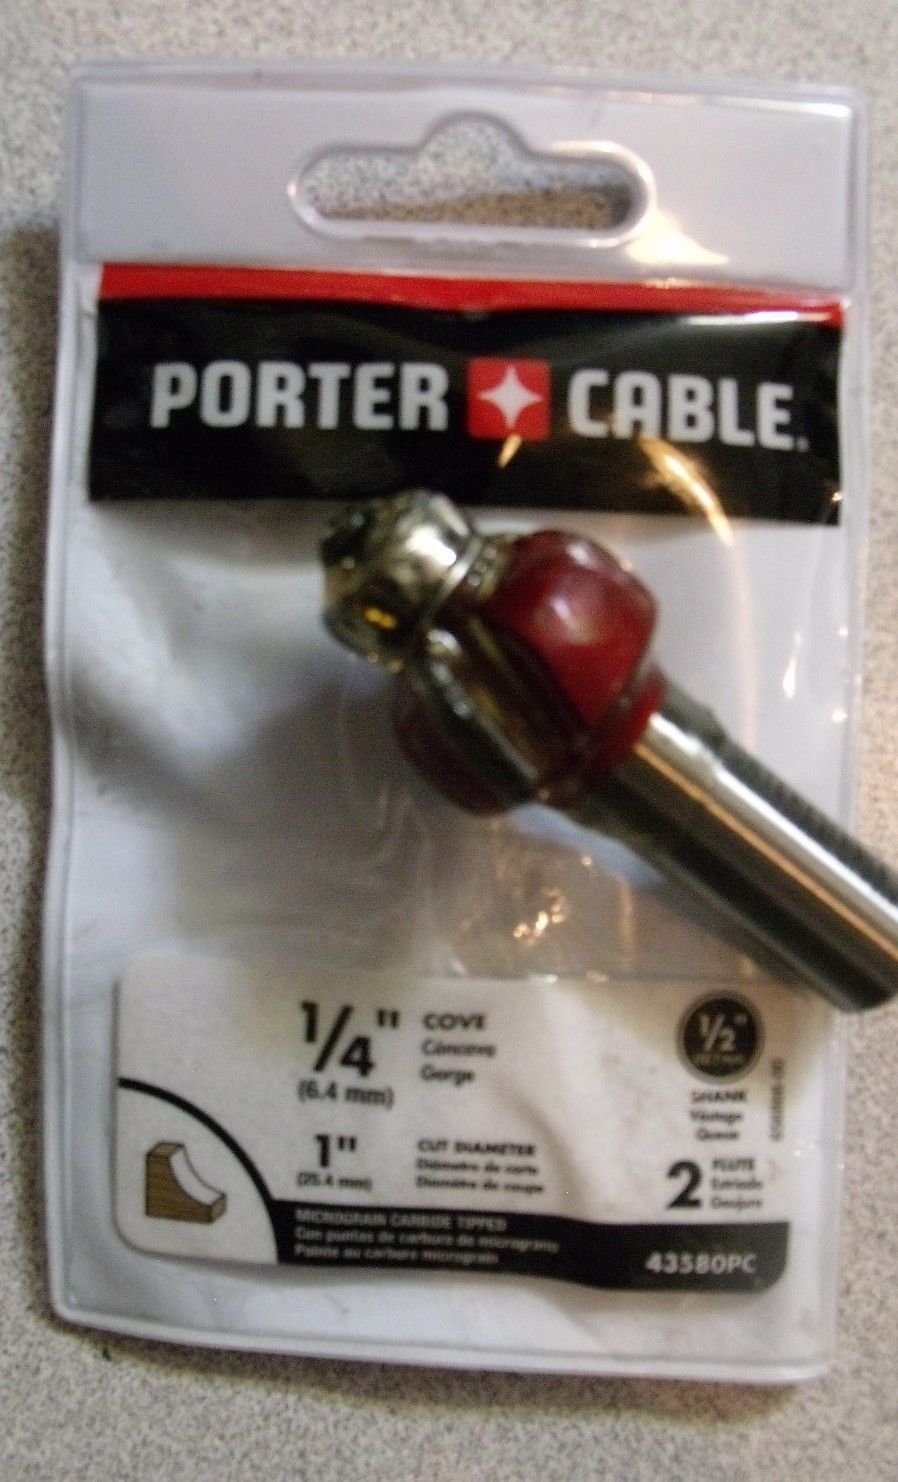 Porter Cable 43580PC 1/4" Cove Router Bit  1/2" Shank